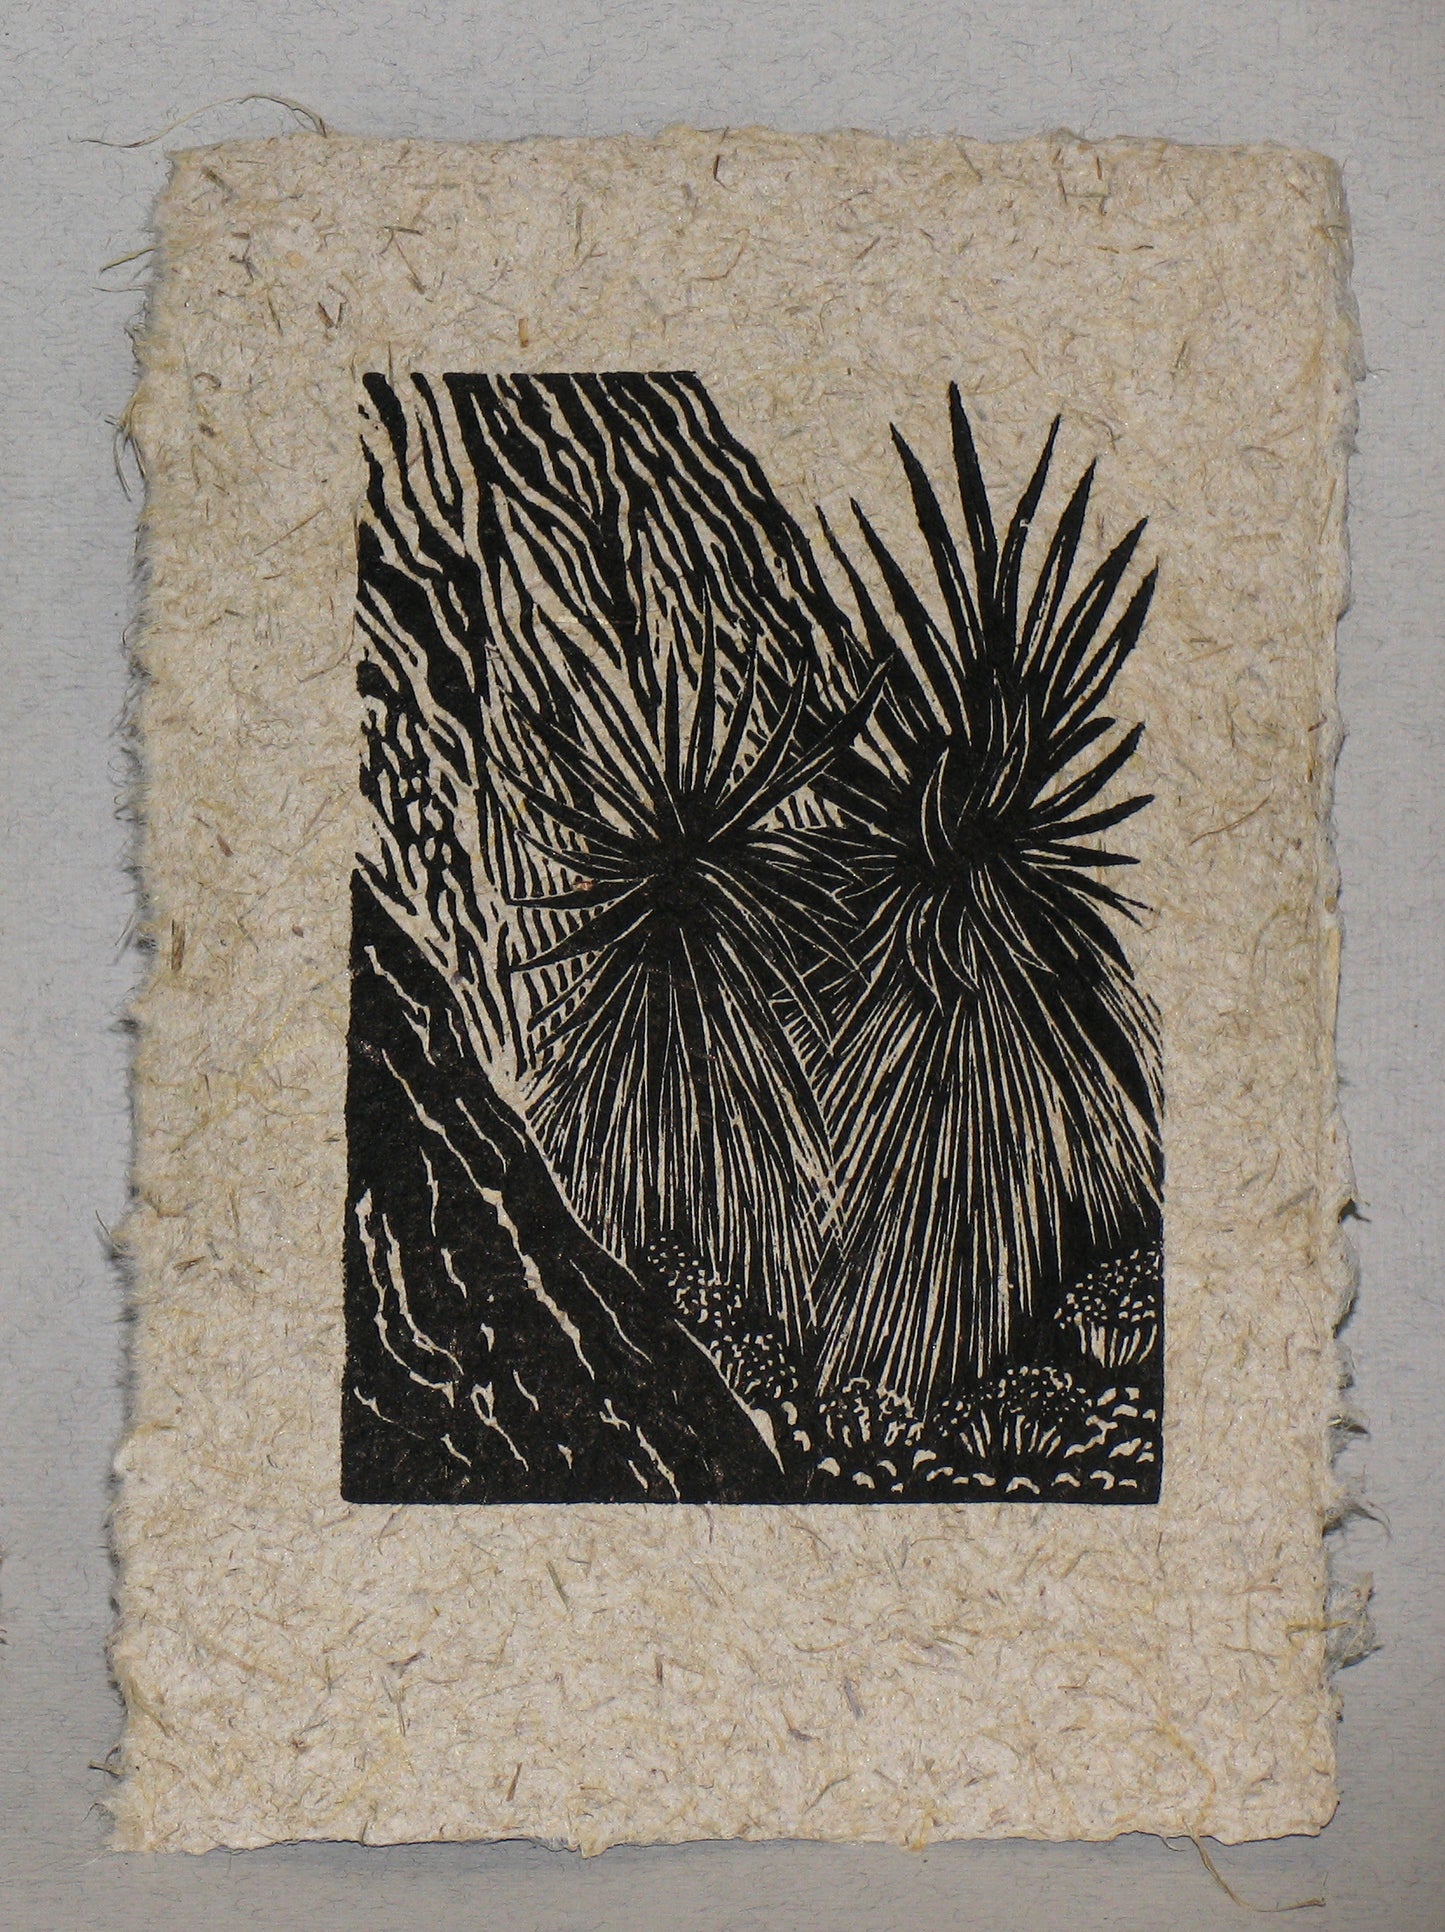 SET 9 Original Woodcut Prints Desert Landscapes Joshua Yucca